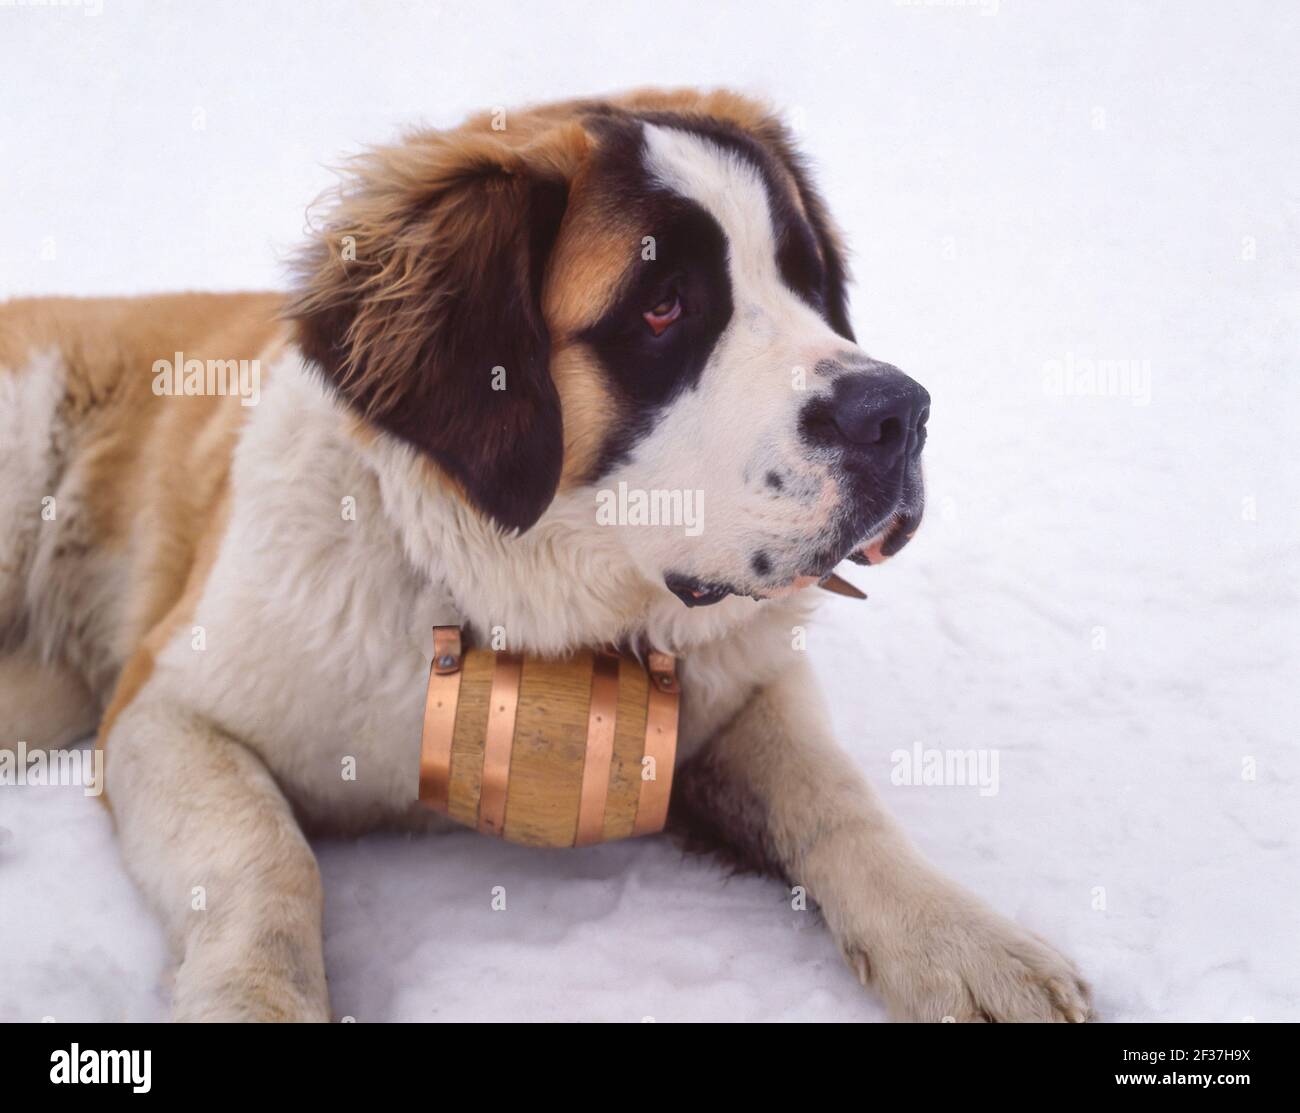 Dog breed switzerland hi-res stock photography and images - Alamy